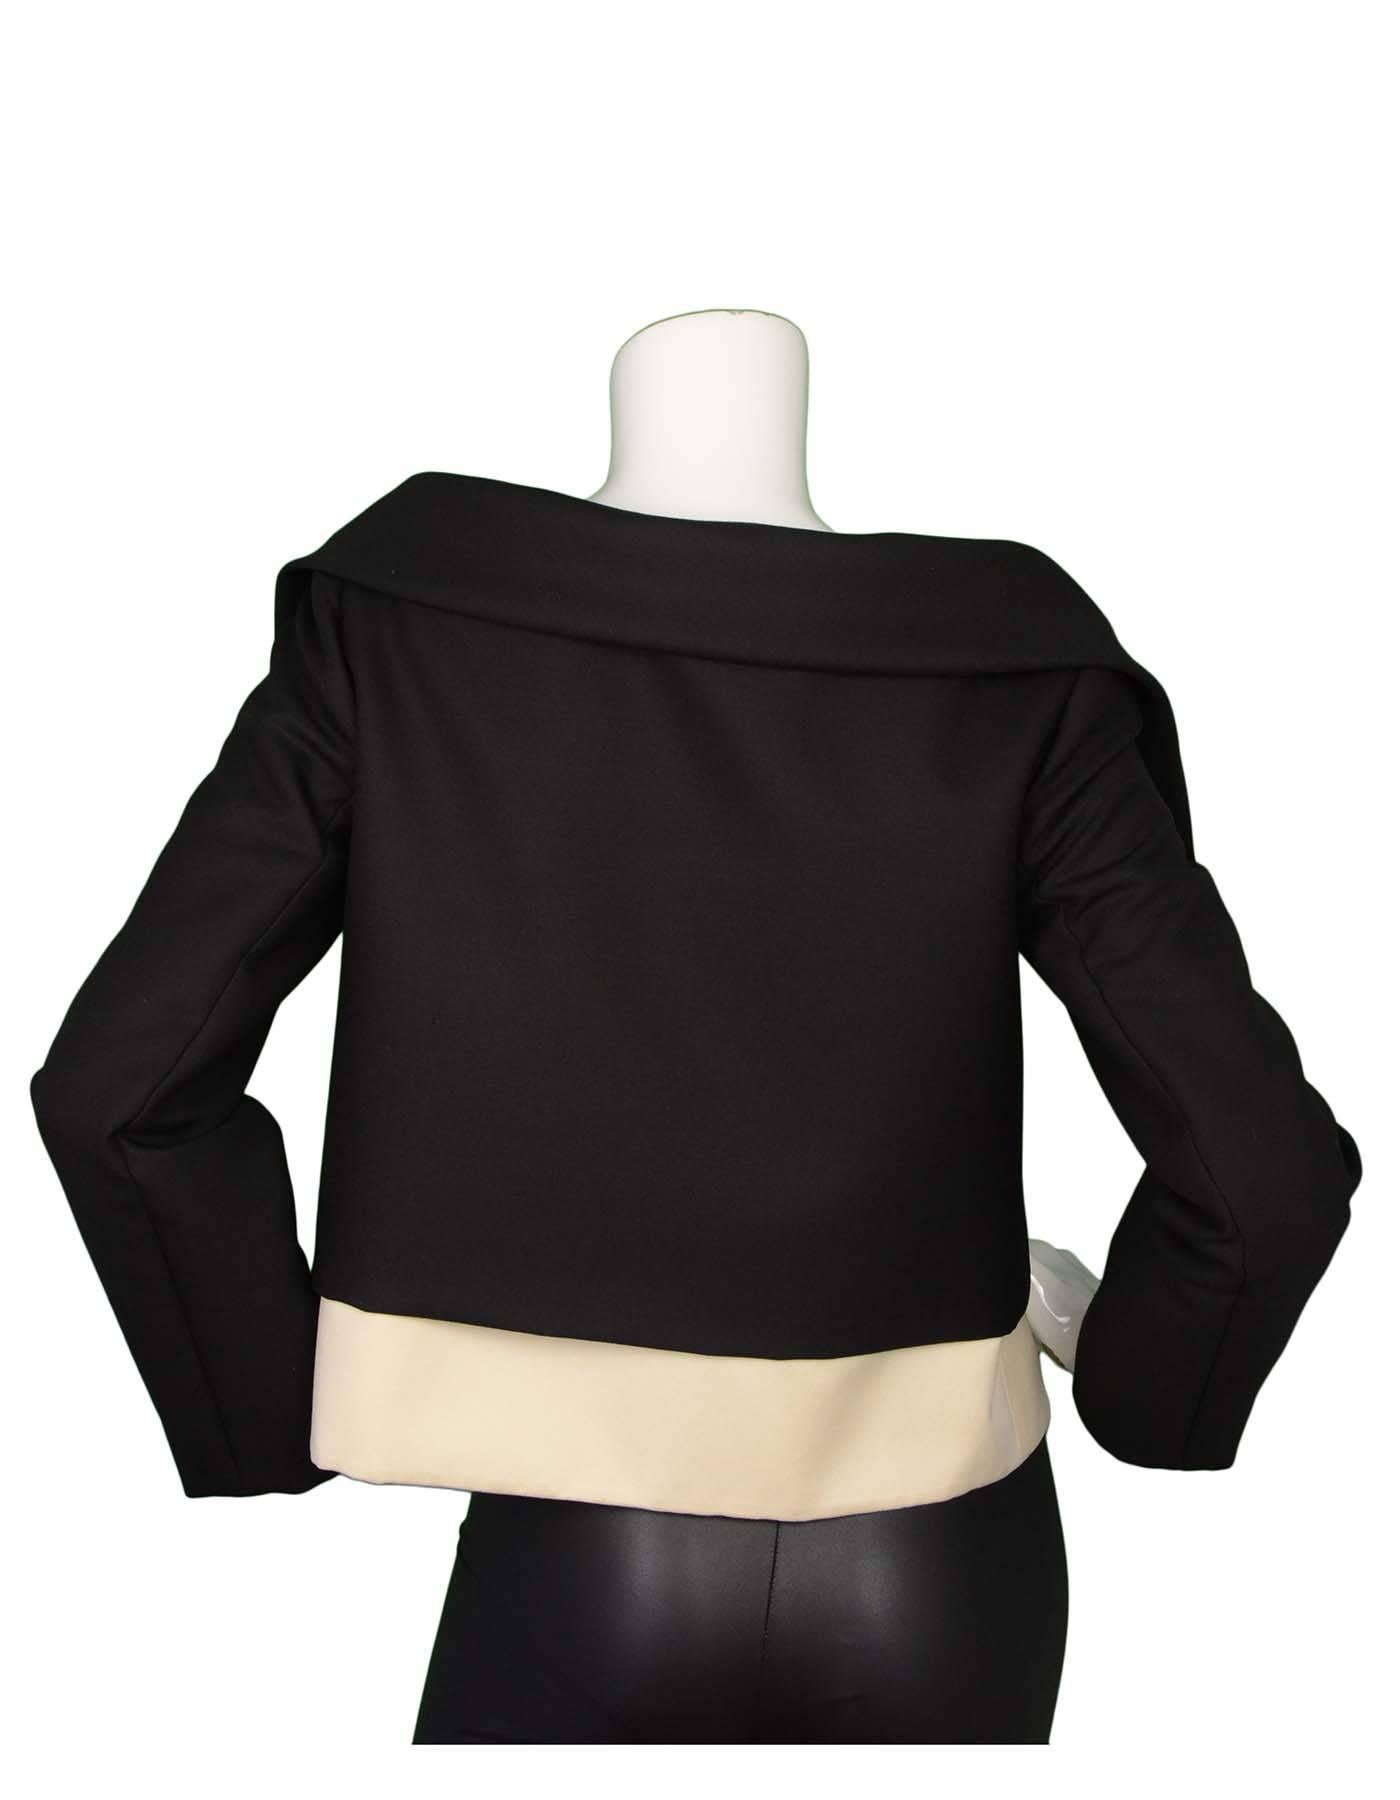 Women's Giambattista Valli Fall '07 Runway Black & Ivory Silk Cropped Jacket sz IT42